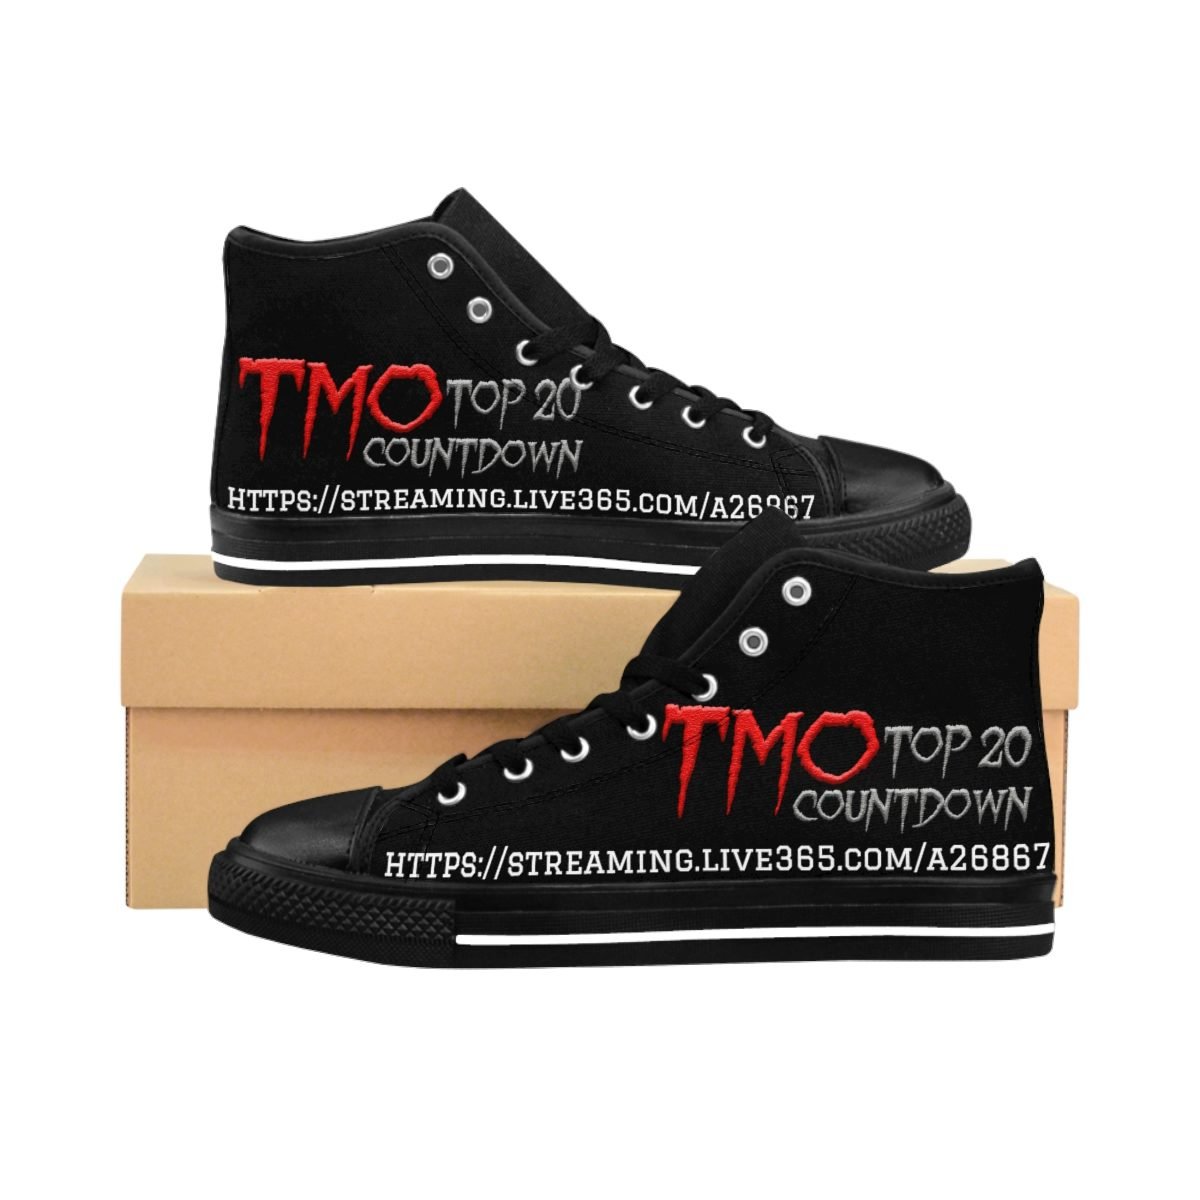 TMO Top 20 Countdown Men’s High-top Sneakers